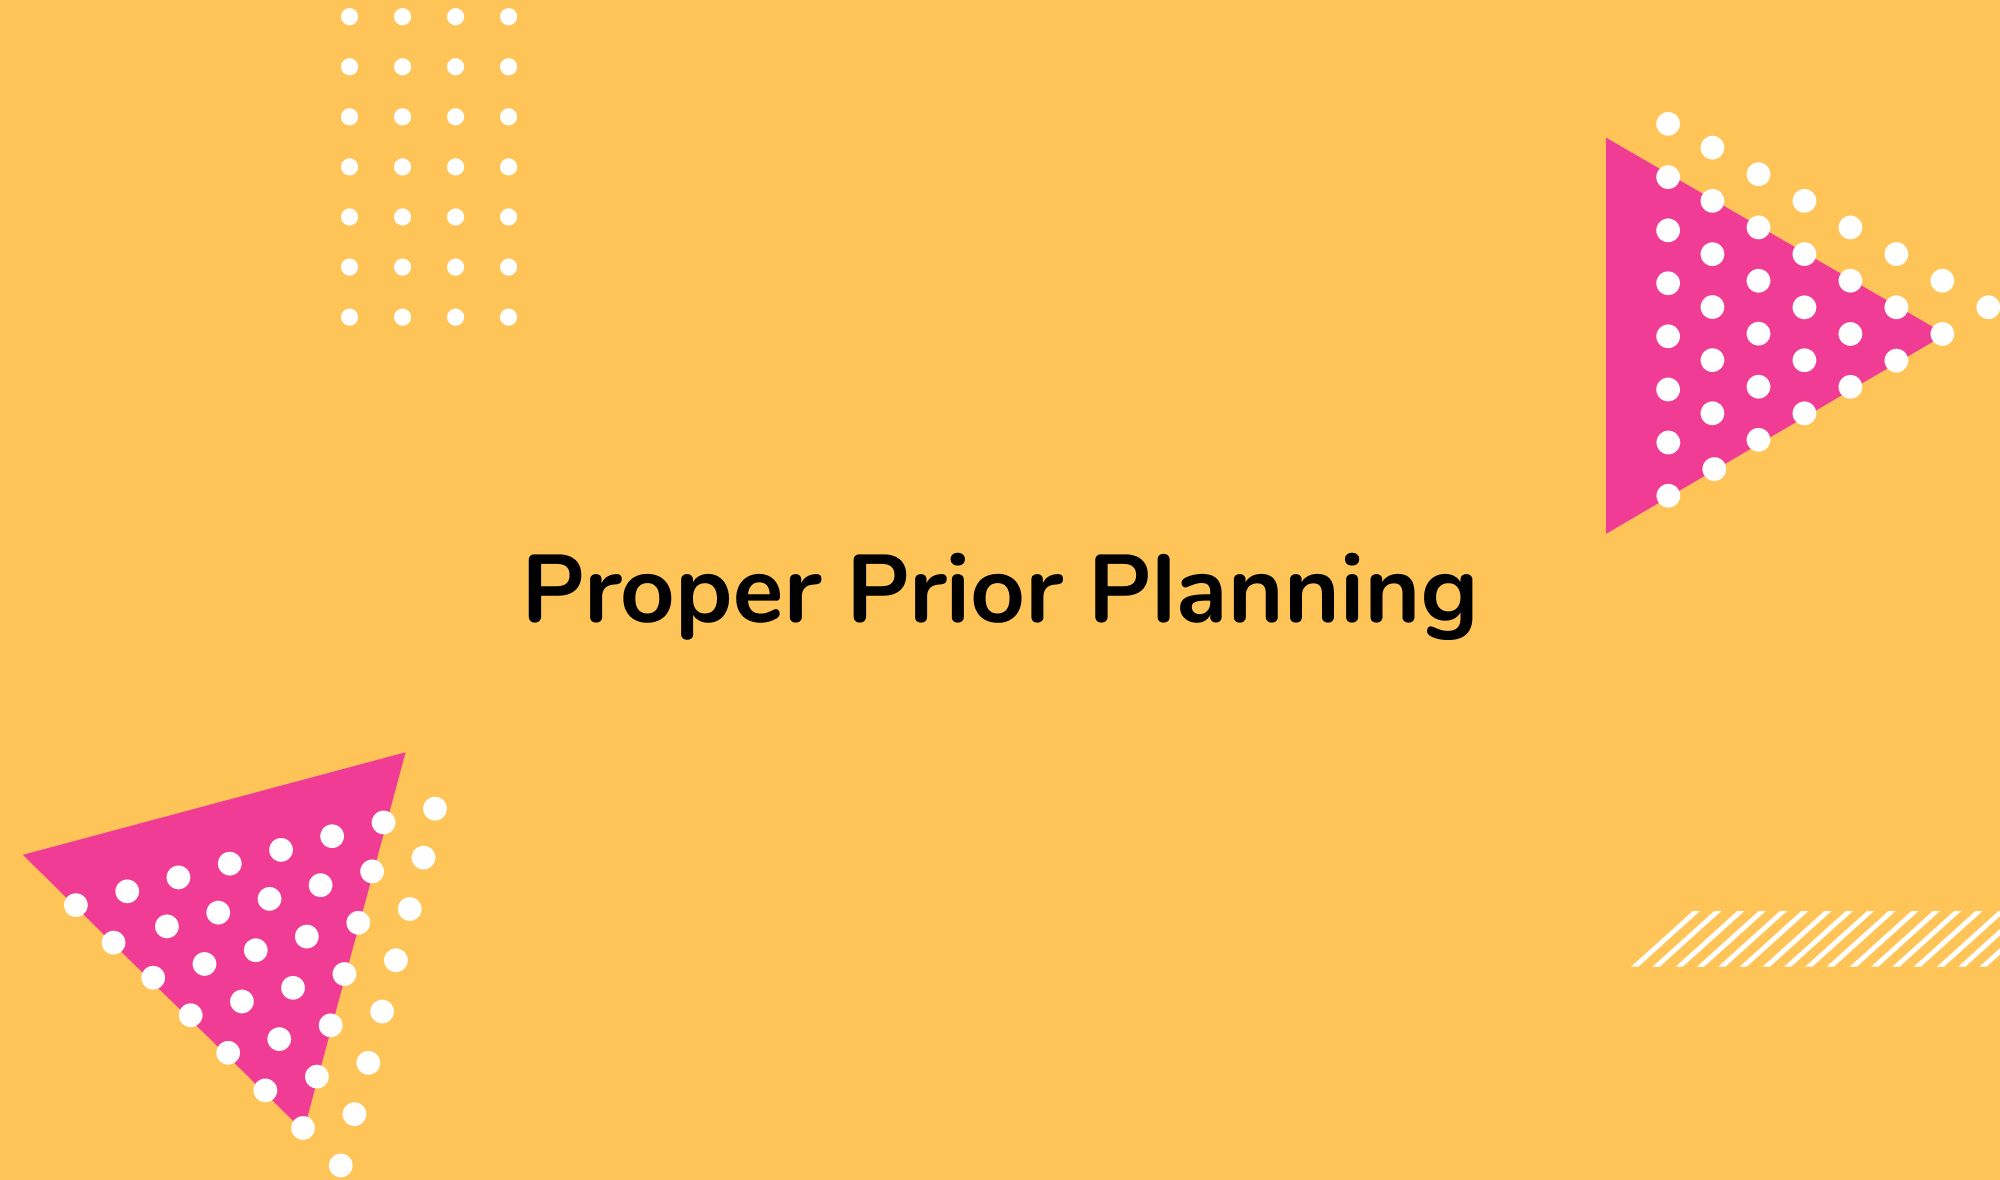 Proper Prior Planning: The Key to Stellar Performance